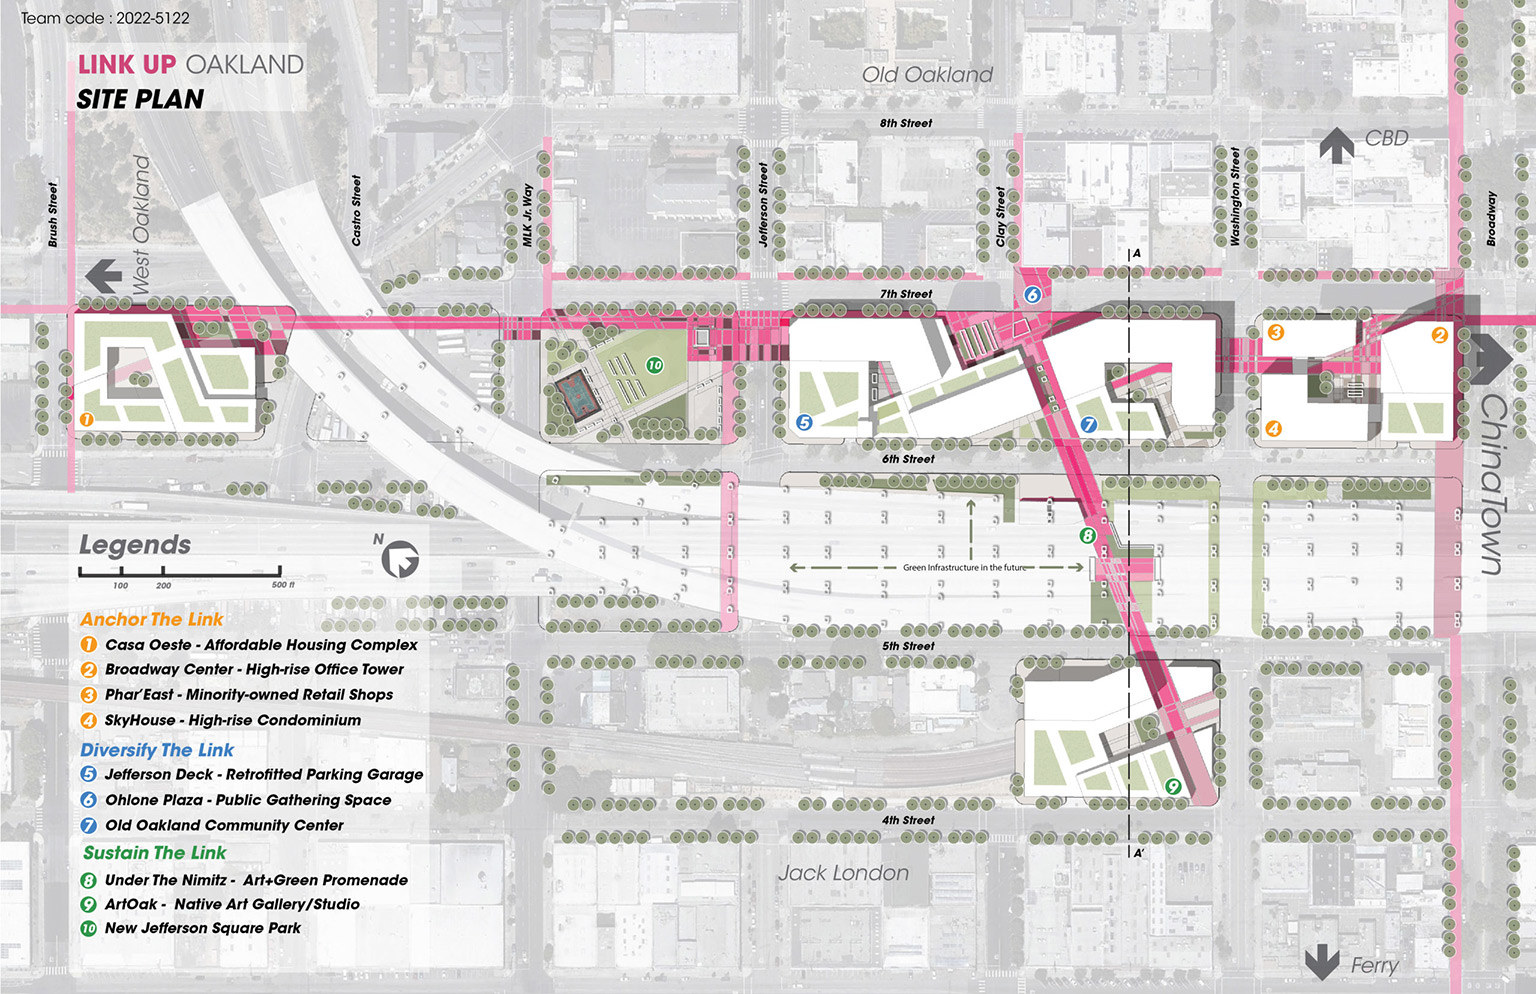 Site plan for Linkup Oakland development concept